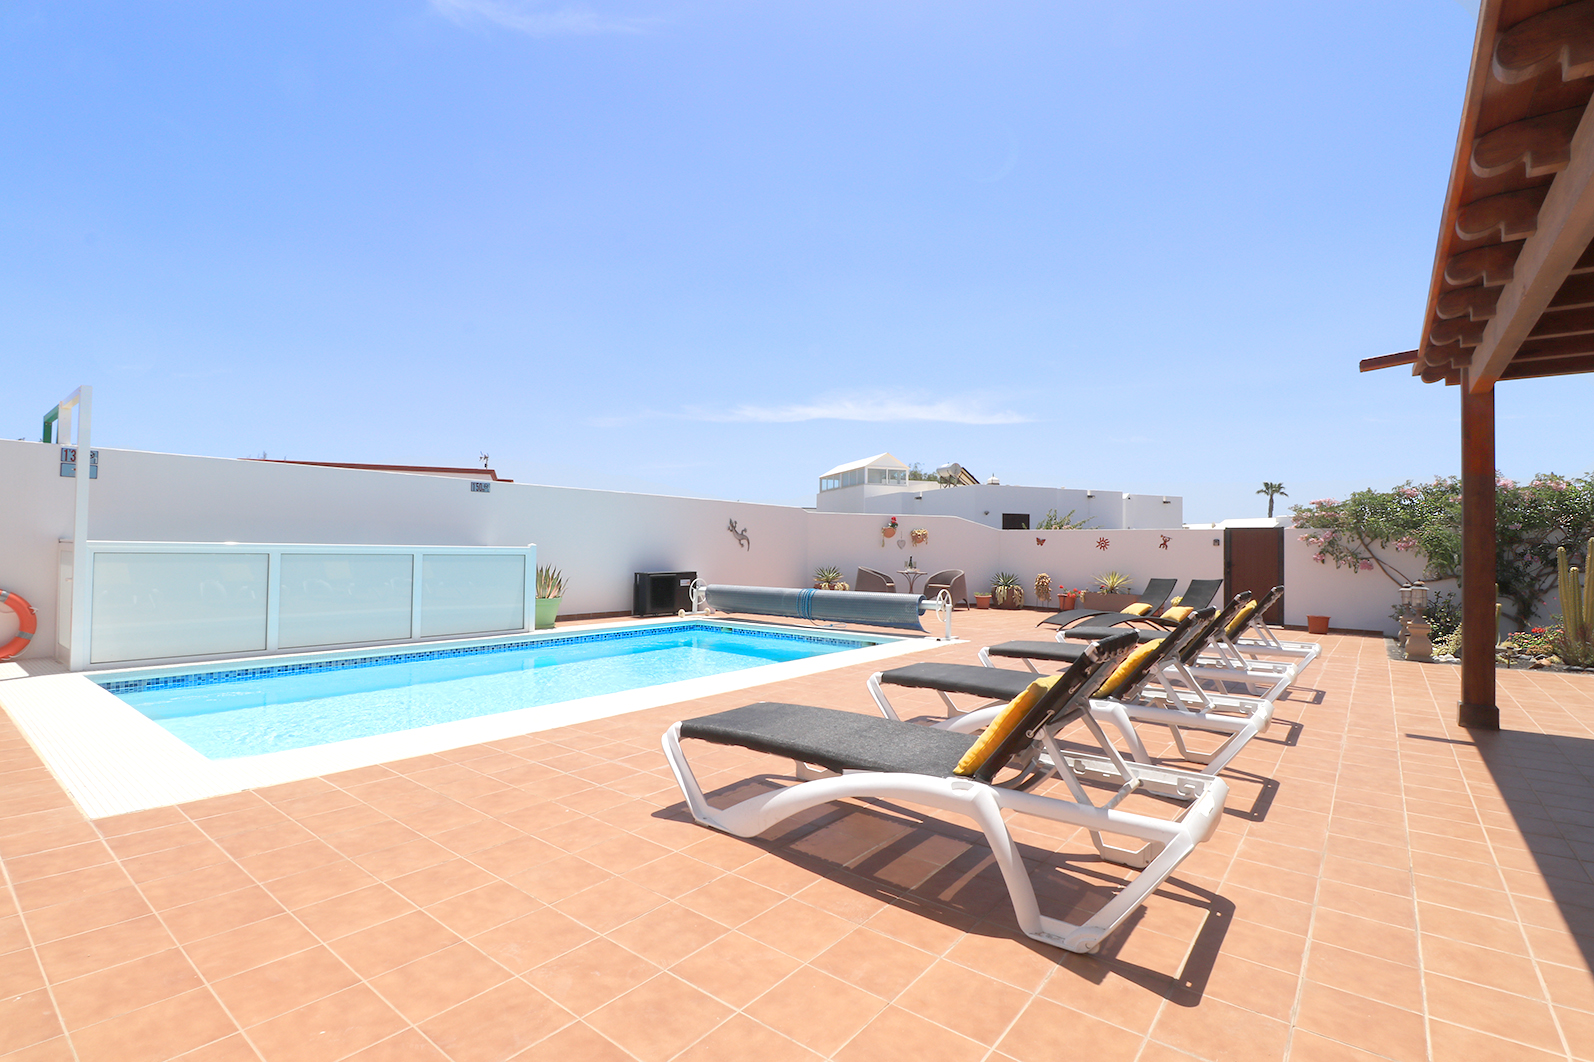 Villa LVC22983 pool and sunbeds